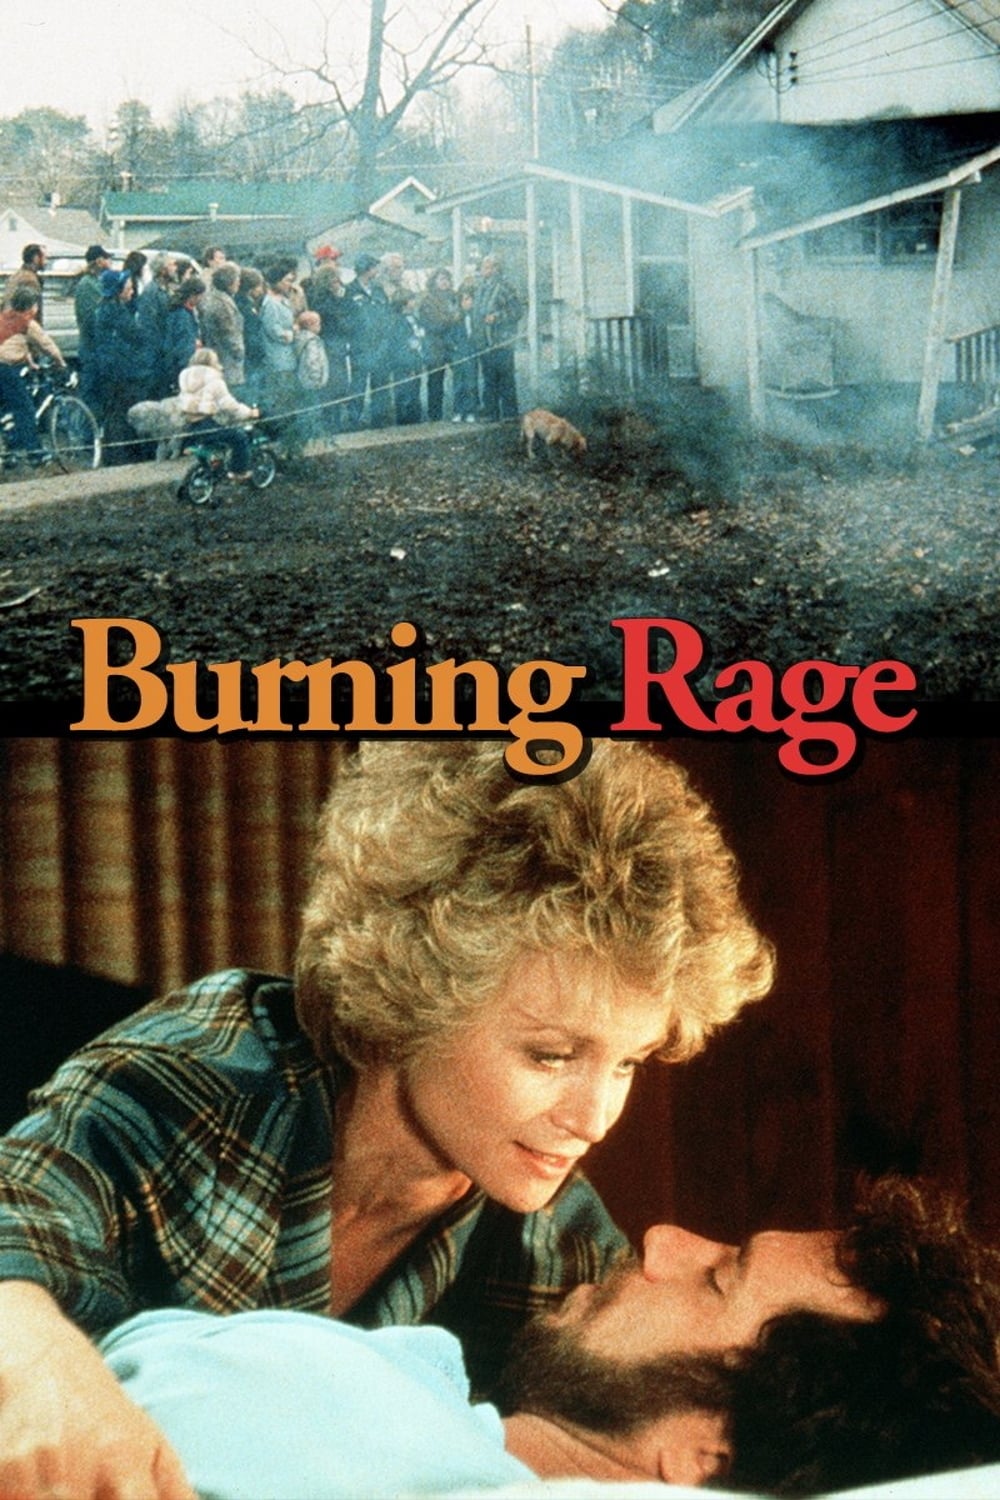 Burning Rage (1984)